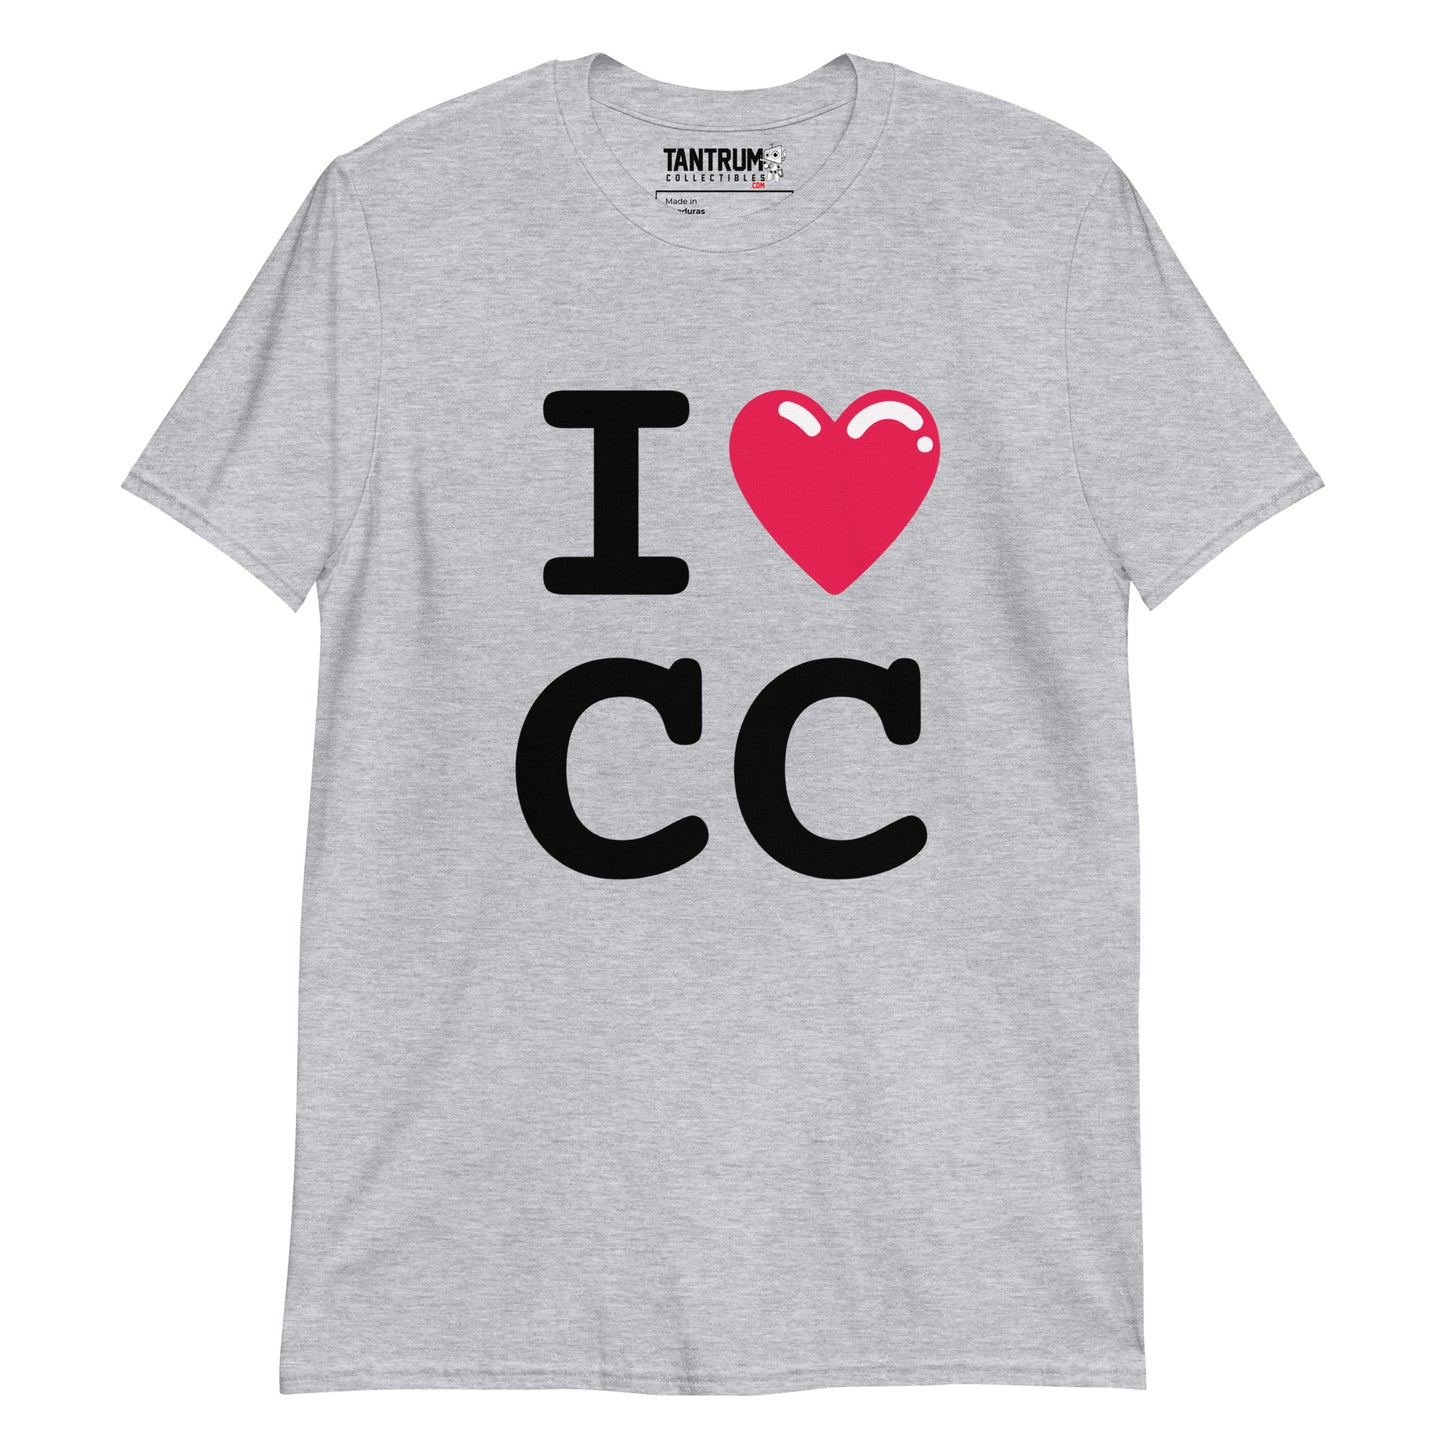 Crowd Control™ - Short-Sleeve Unisex T-Shirt - I Heart CC (Company Portal)